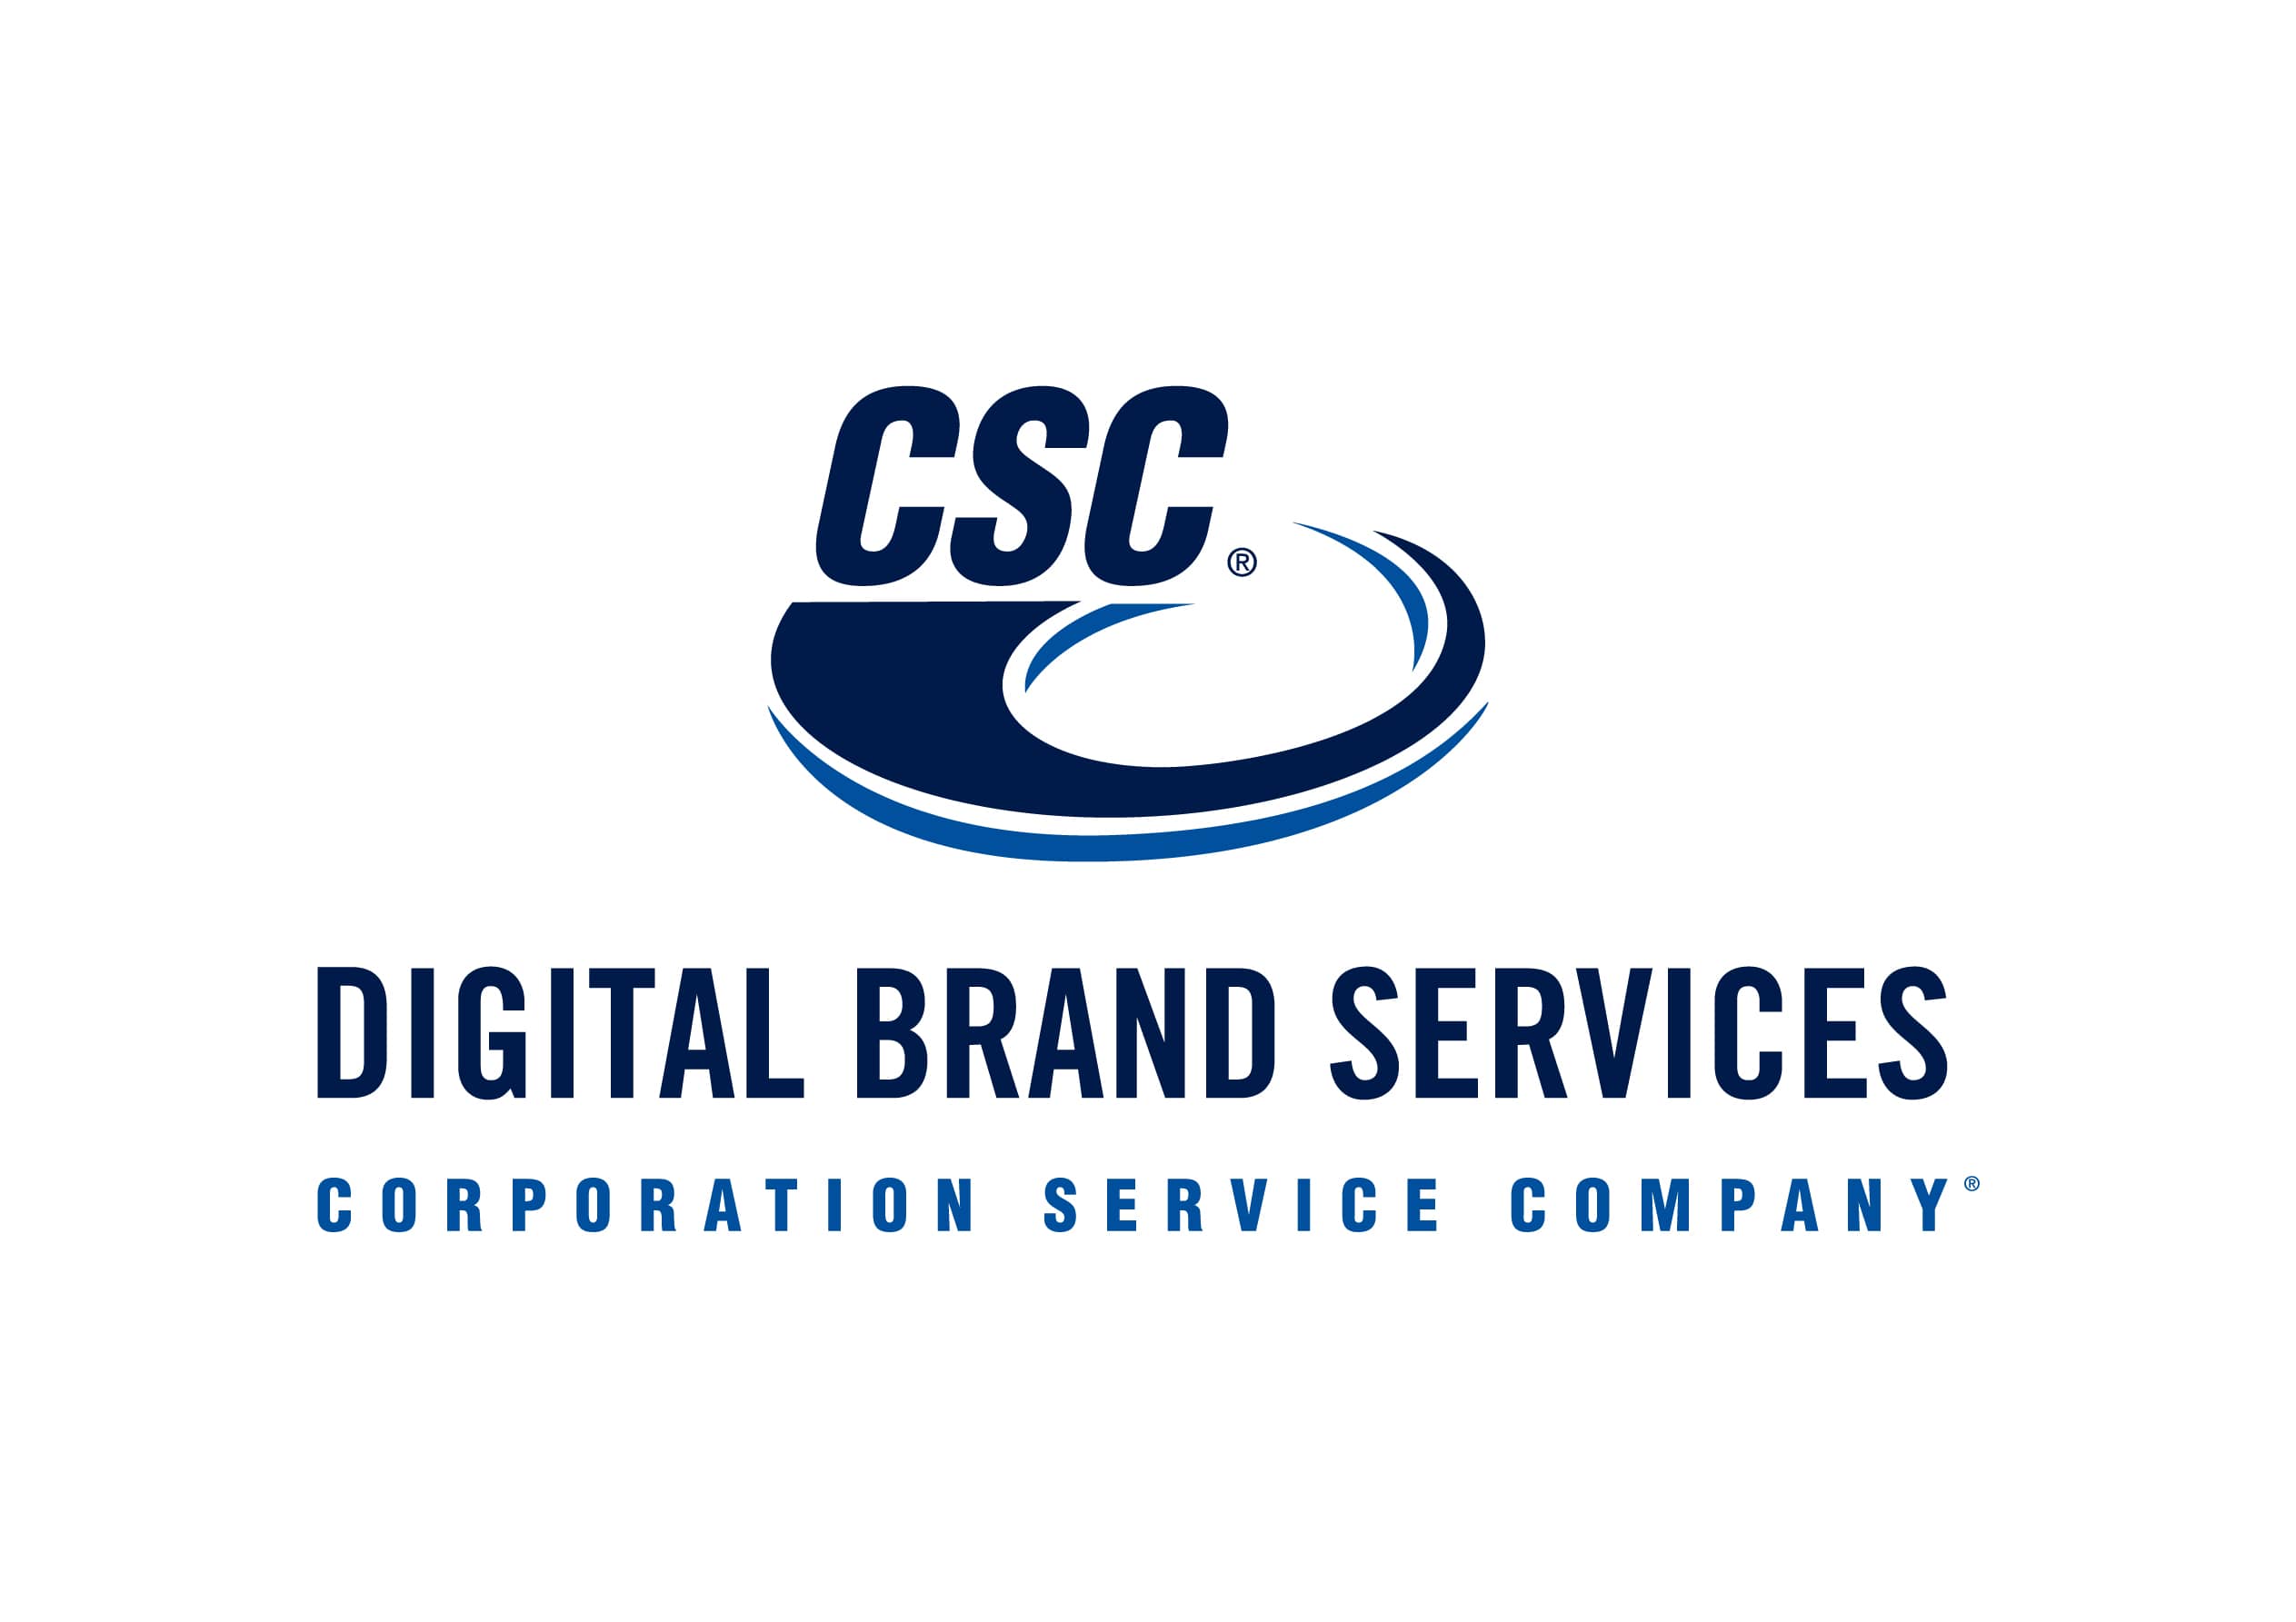 "Corporation service Company". Registrars. Company corporation